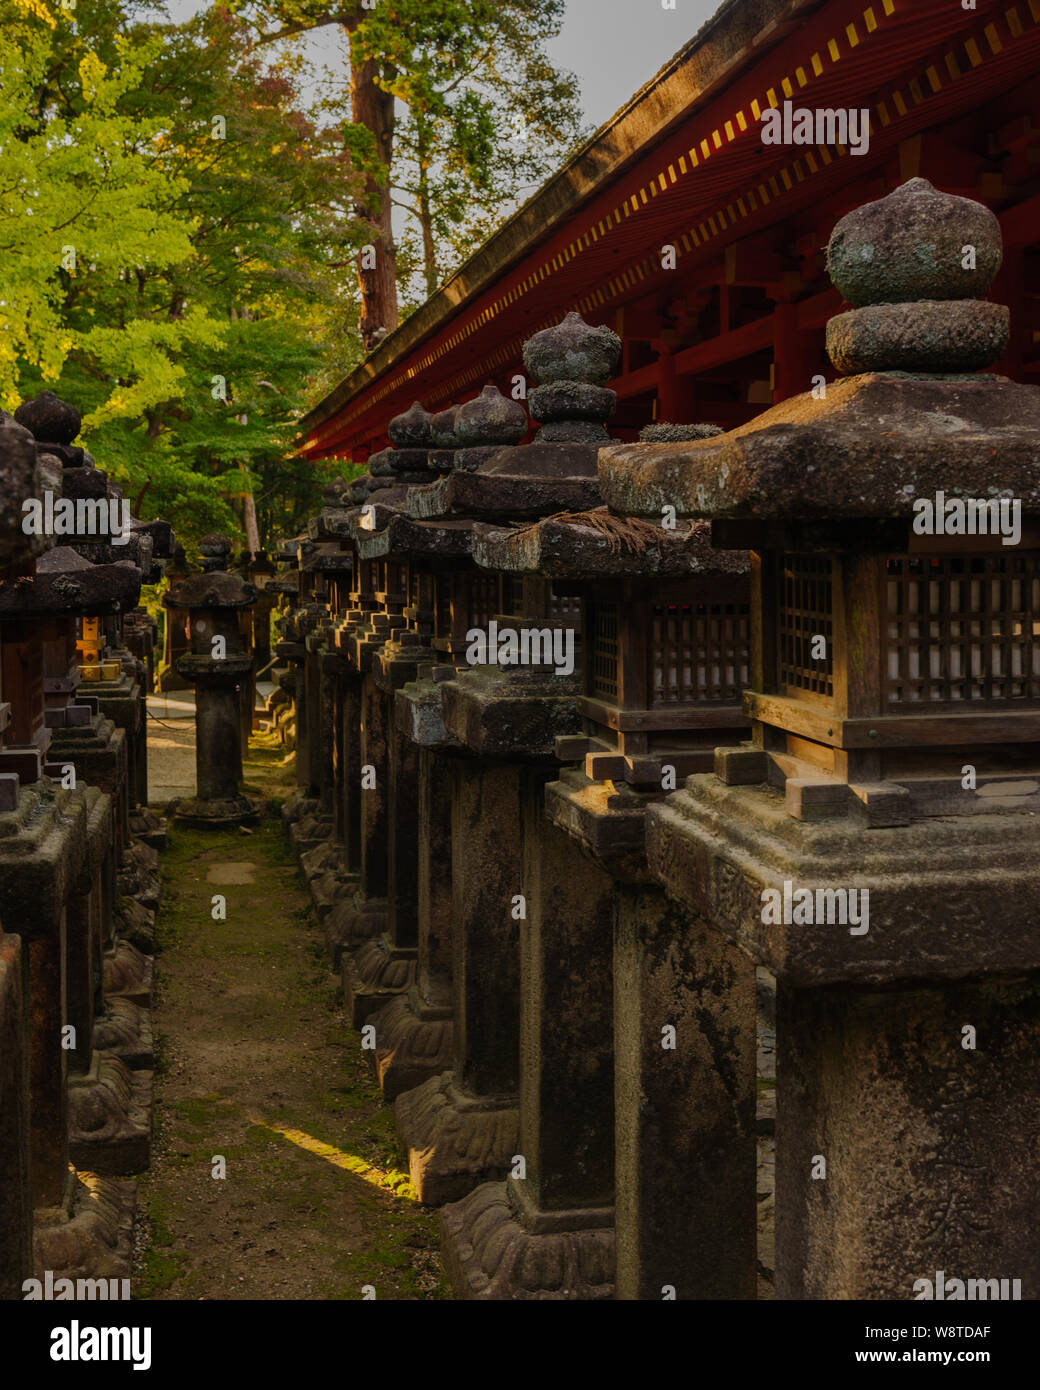 Traditional stone latern covered with moss in warm evening sunlight are iconic symbols of Naras Kasuga Taisha Shrine, Japan November 2018 Stock Photo